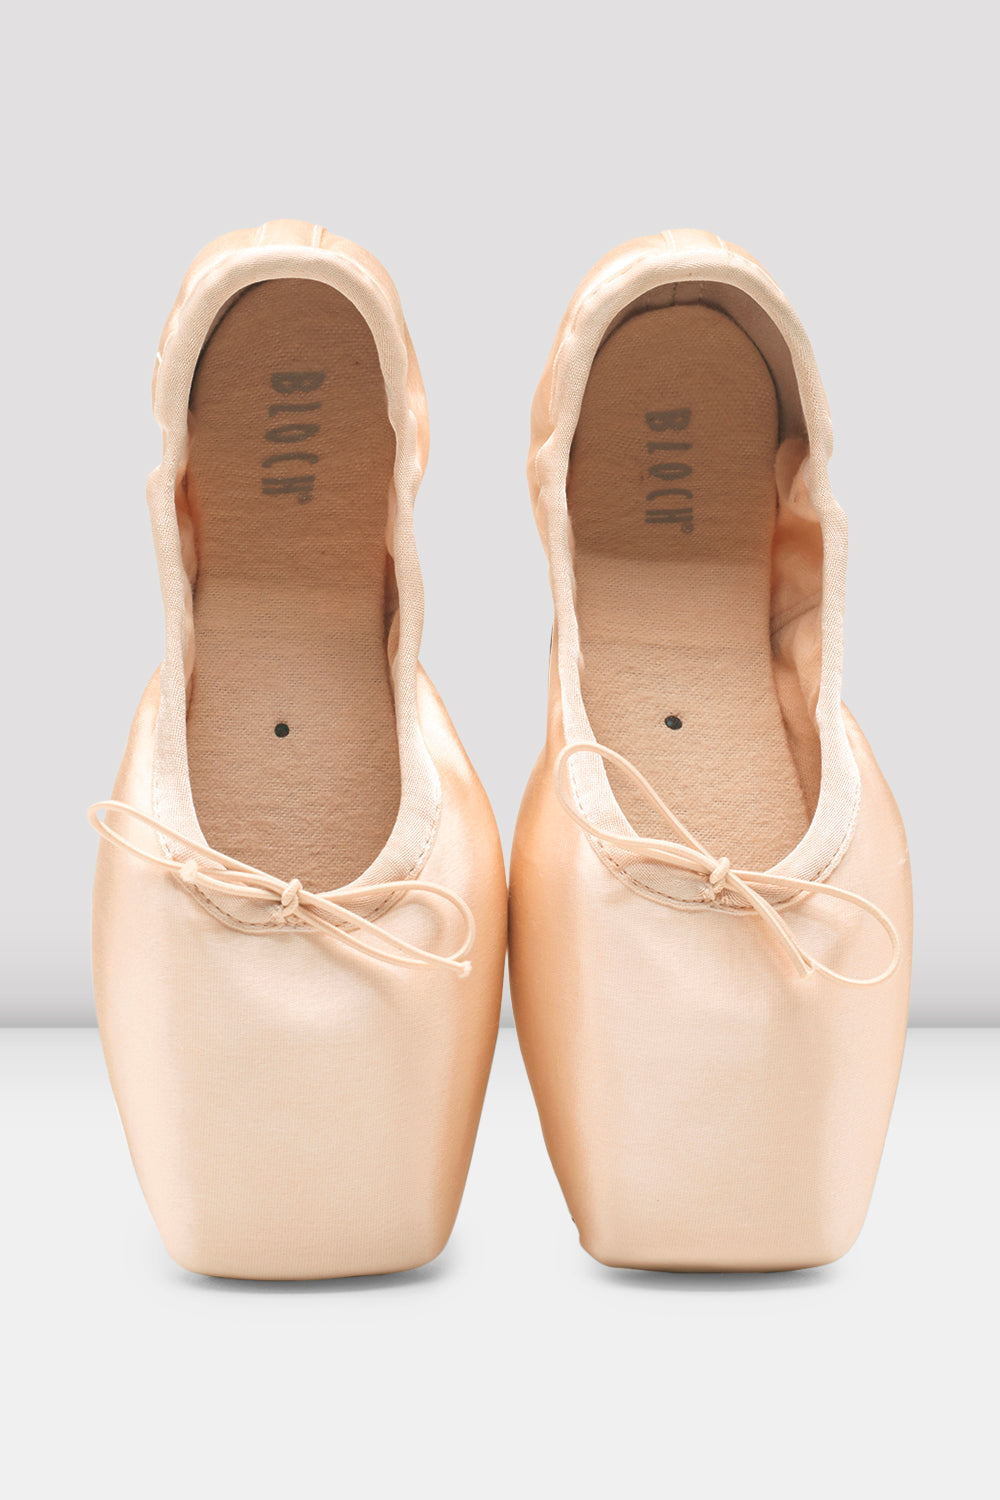 Superlative Stretch Pointe Shoes, Pink – BLOCH Dance UK